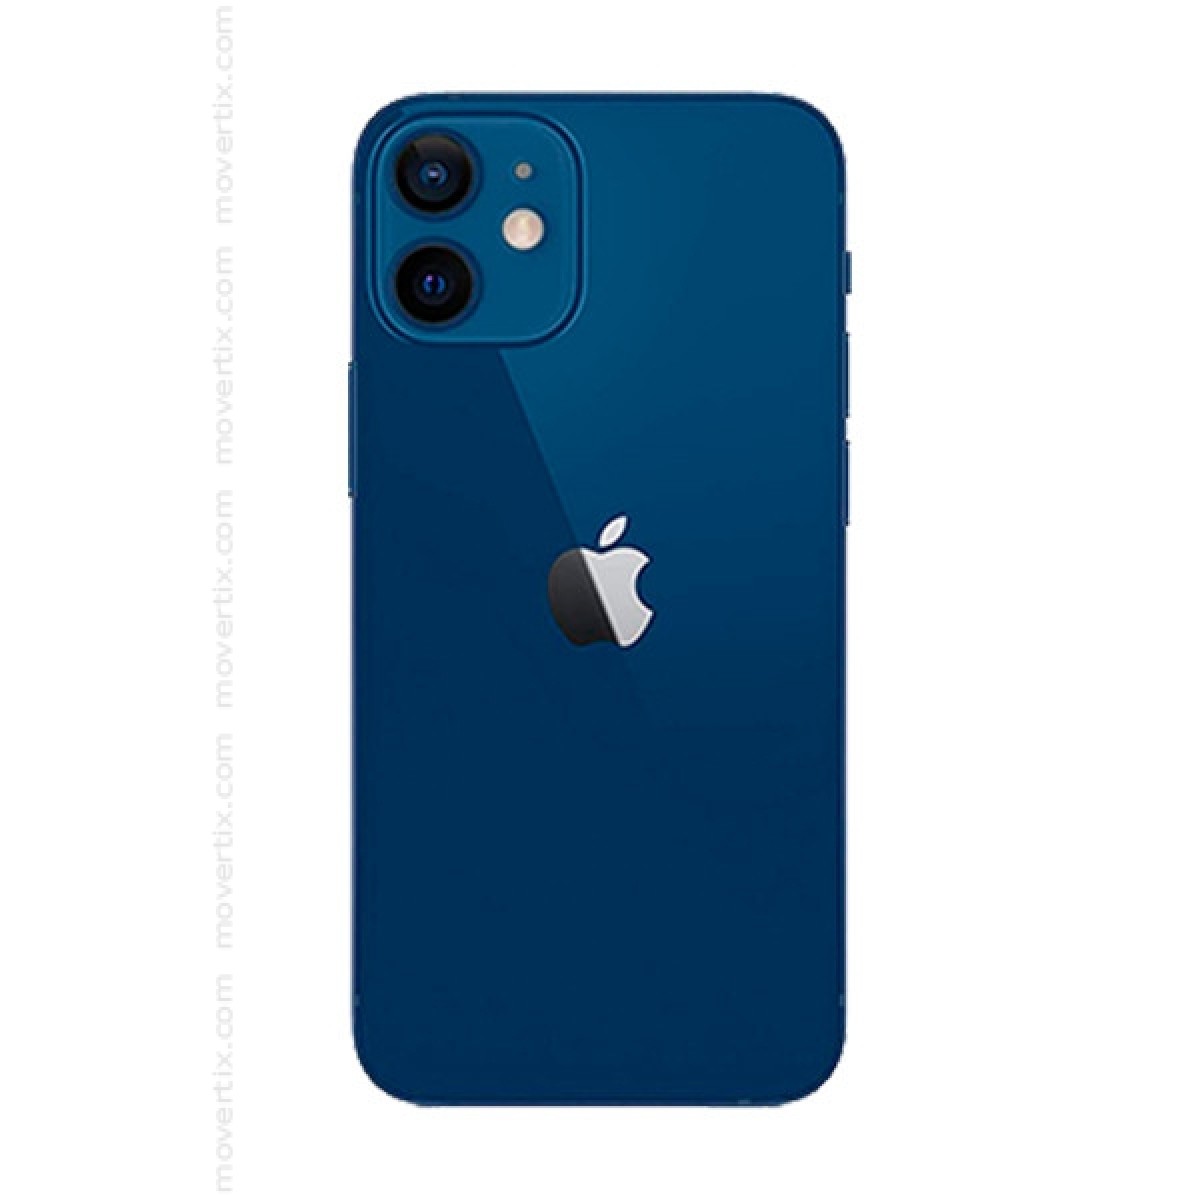 Iphone 12 Mini Blue 64gb Movertix Mobile Phones Shop